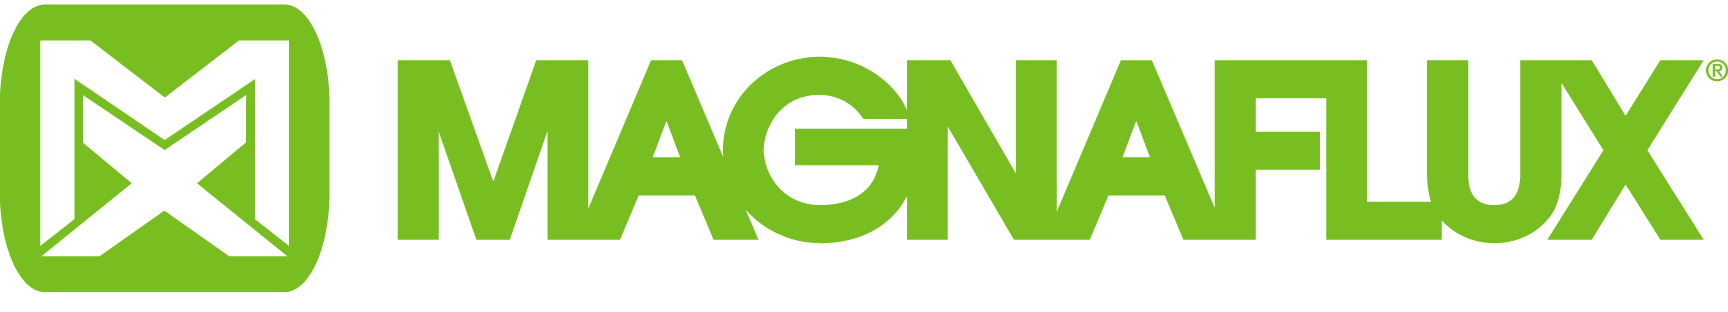 magnaflux logotagline in english rgb